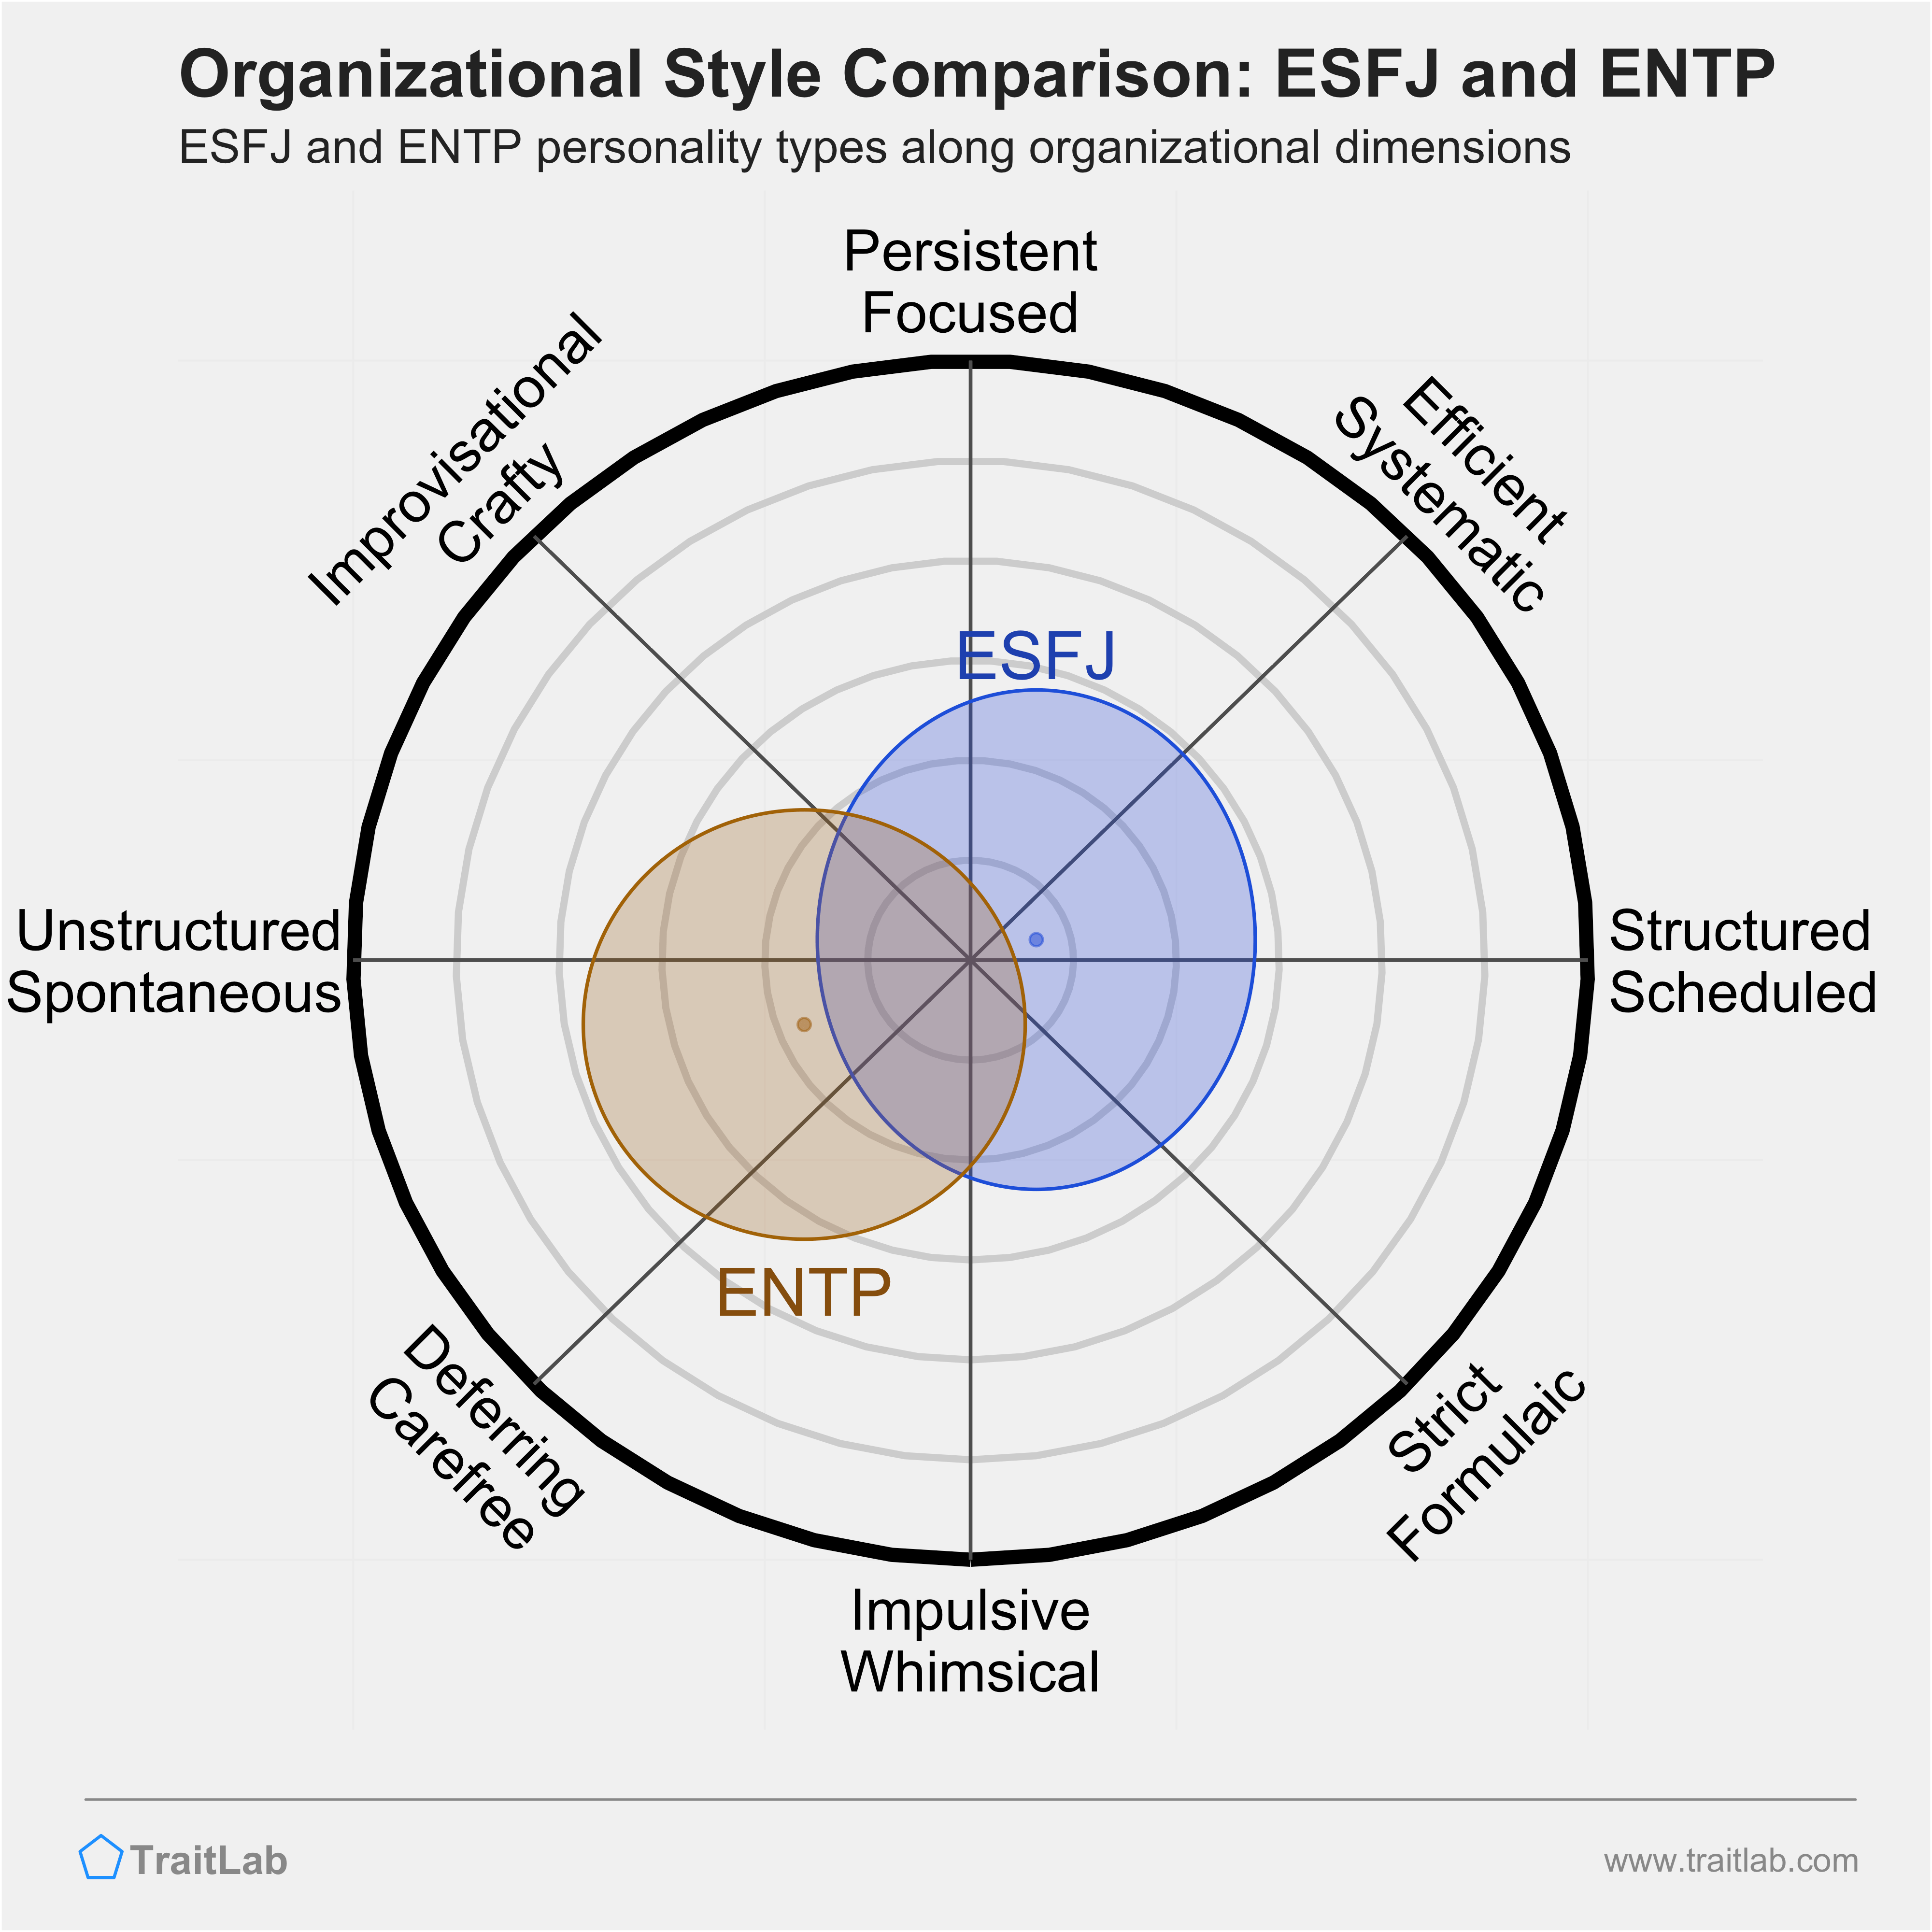 ESFJ and ENTP comparison across organizational dimensions